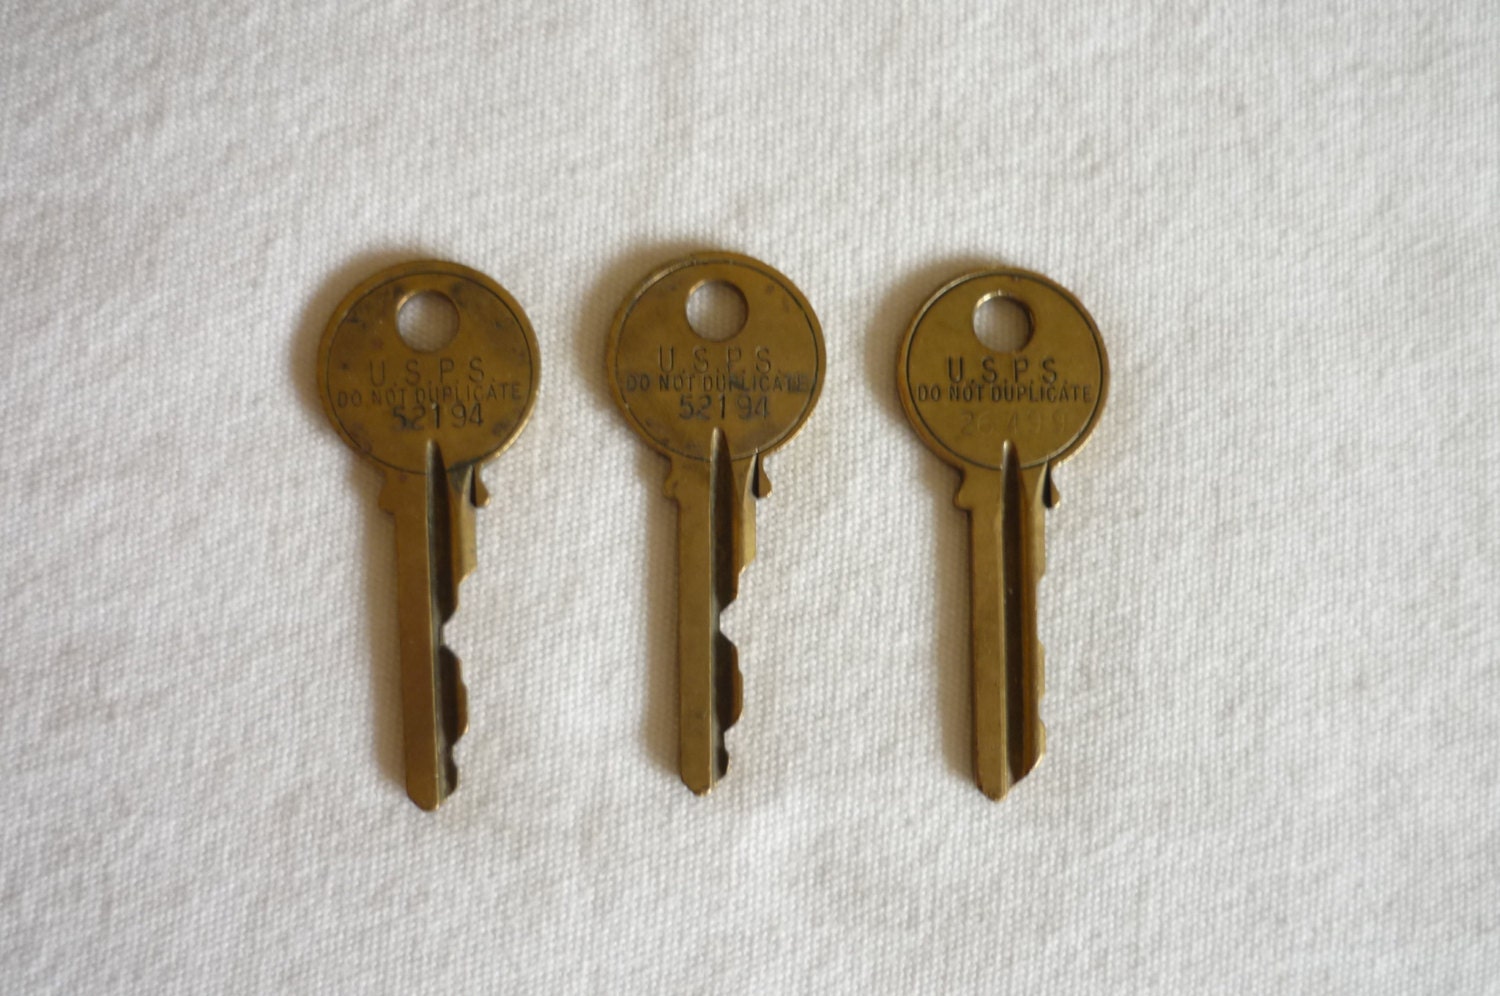 Master keys to USPS